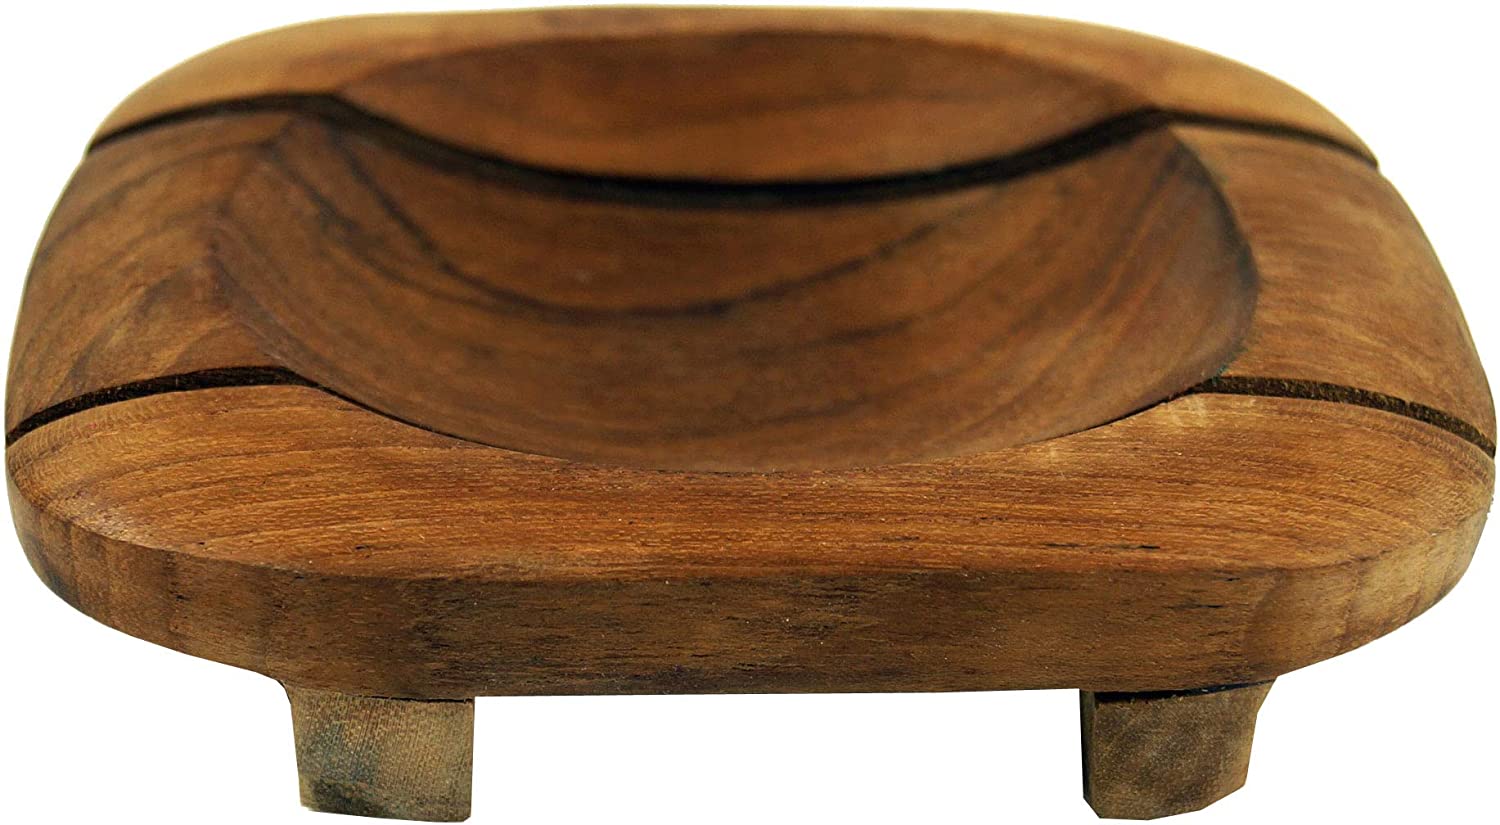 GURU SHOP Exotic Soap Dish, Brown, Wood, 2.5 x 11 x 8.5 cm